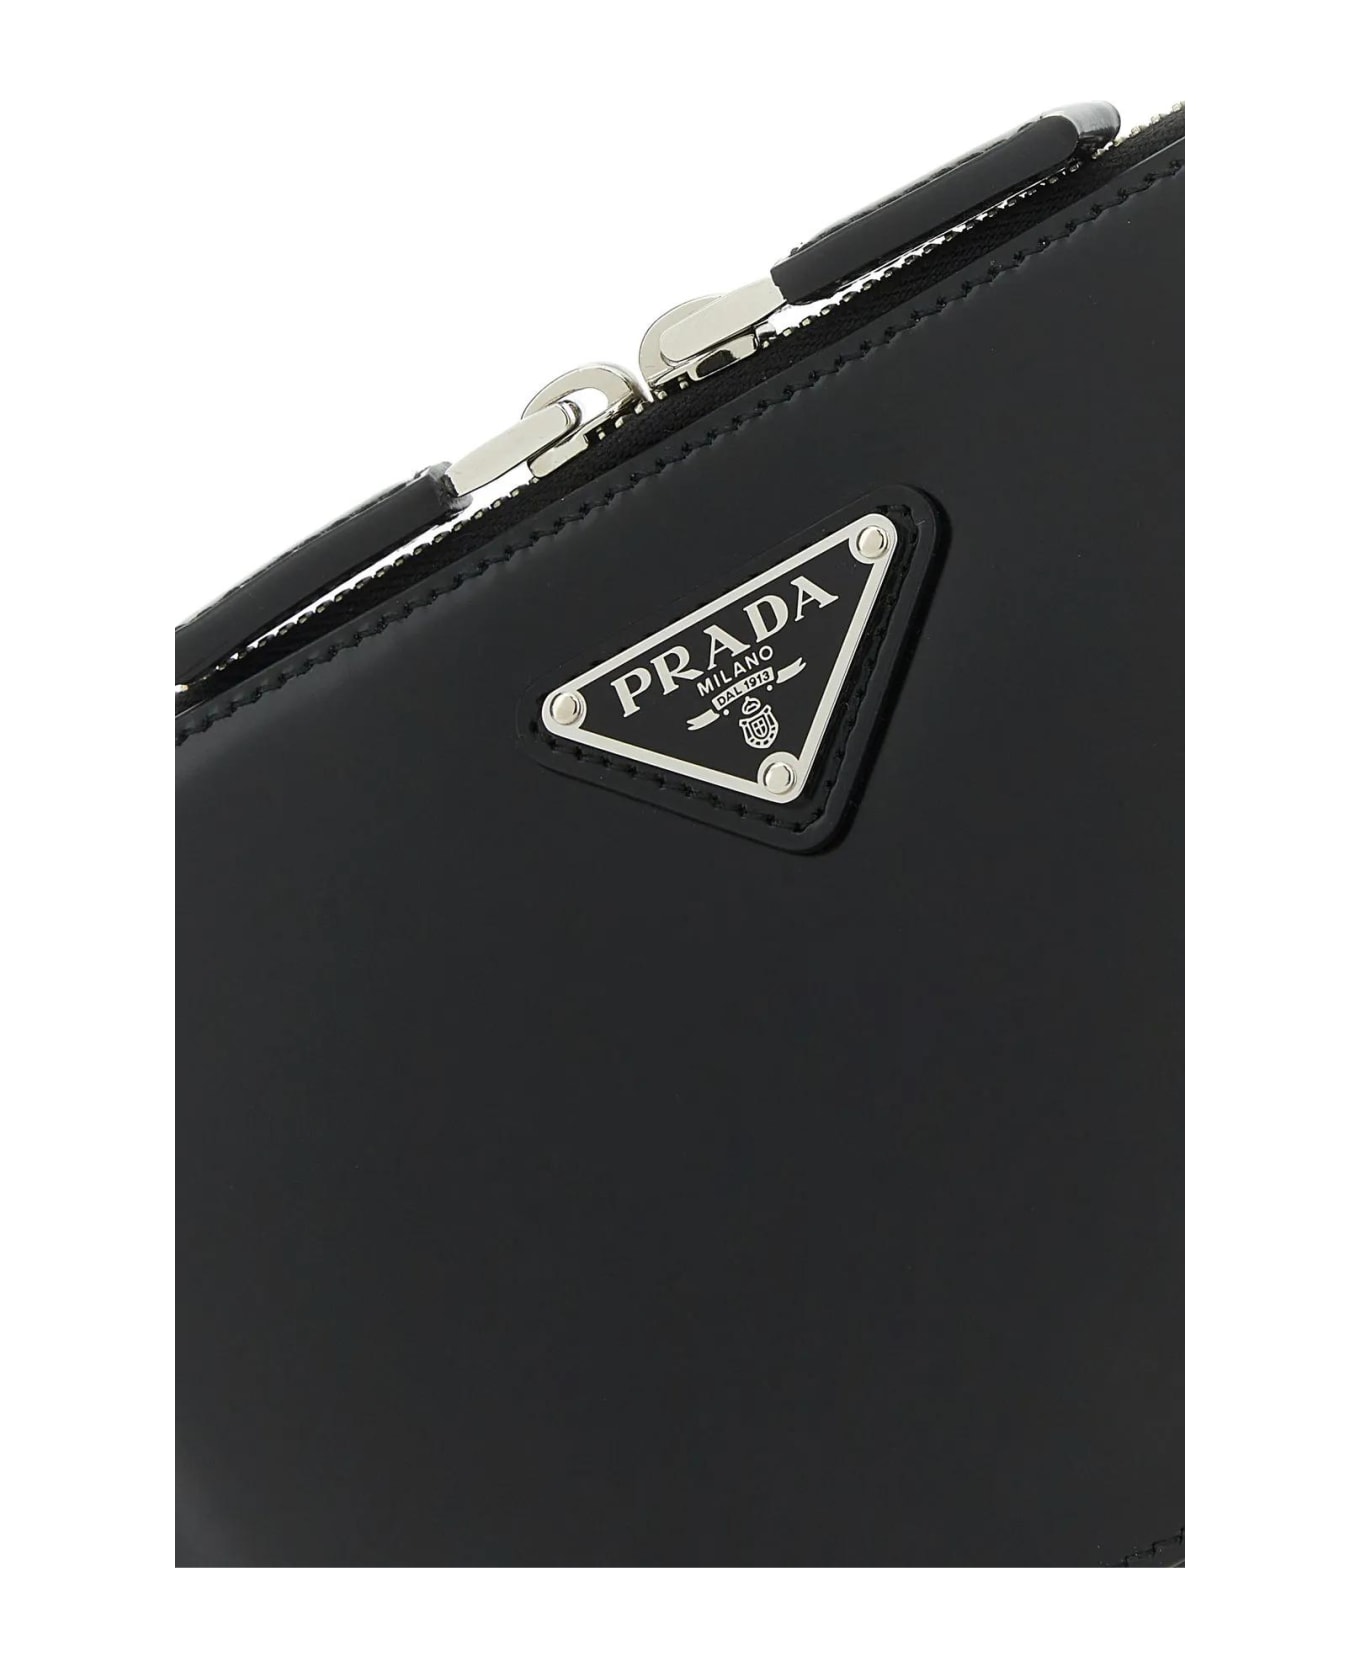 Prada Black Leather Brique Crossbody Bag - Nero